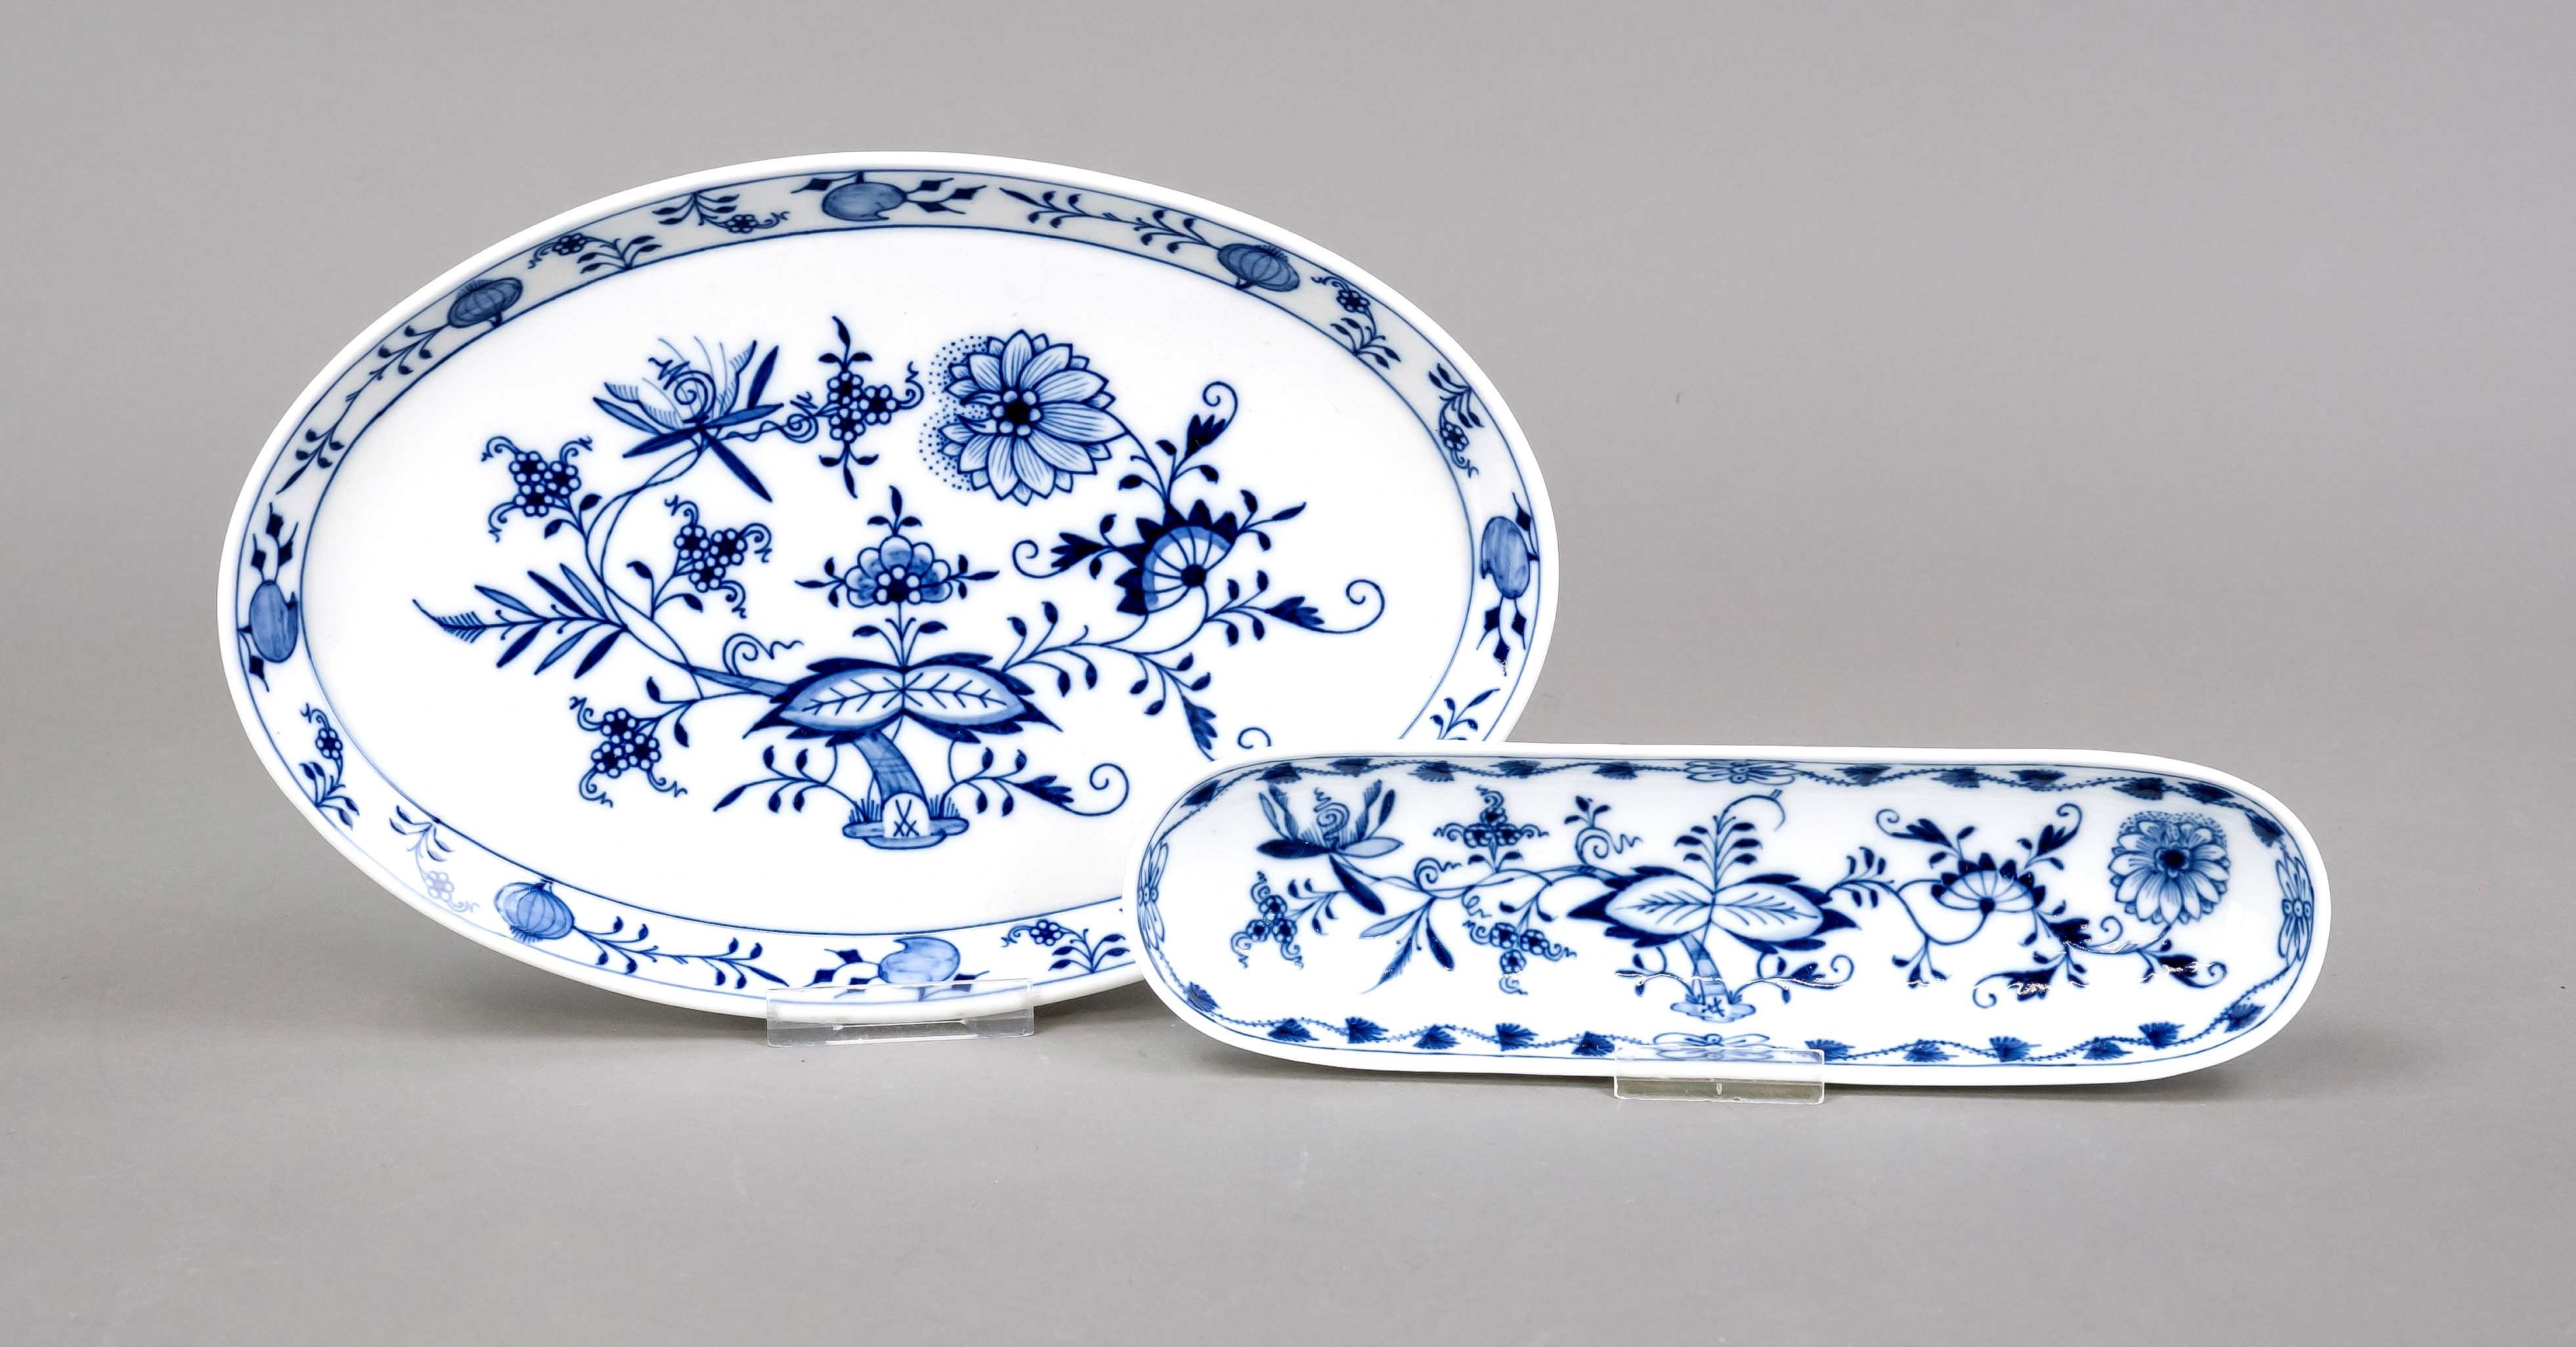 Two oval bowls, Meissen, marks after 1934, 1st choice, decor onion pattern in underglaze blue,